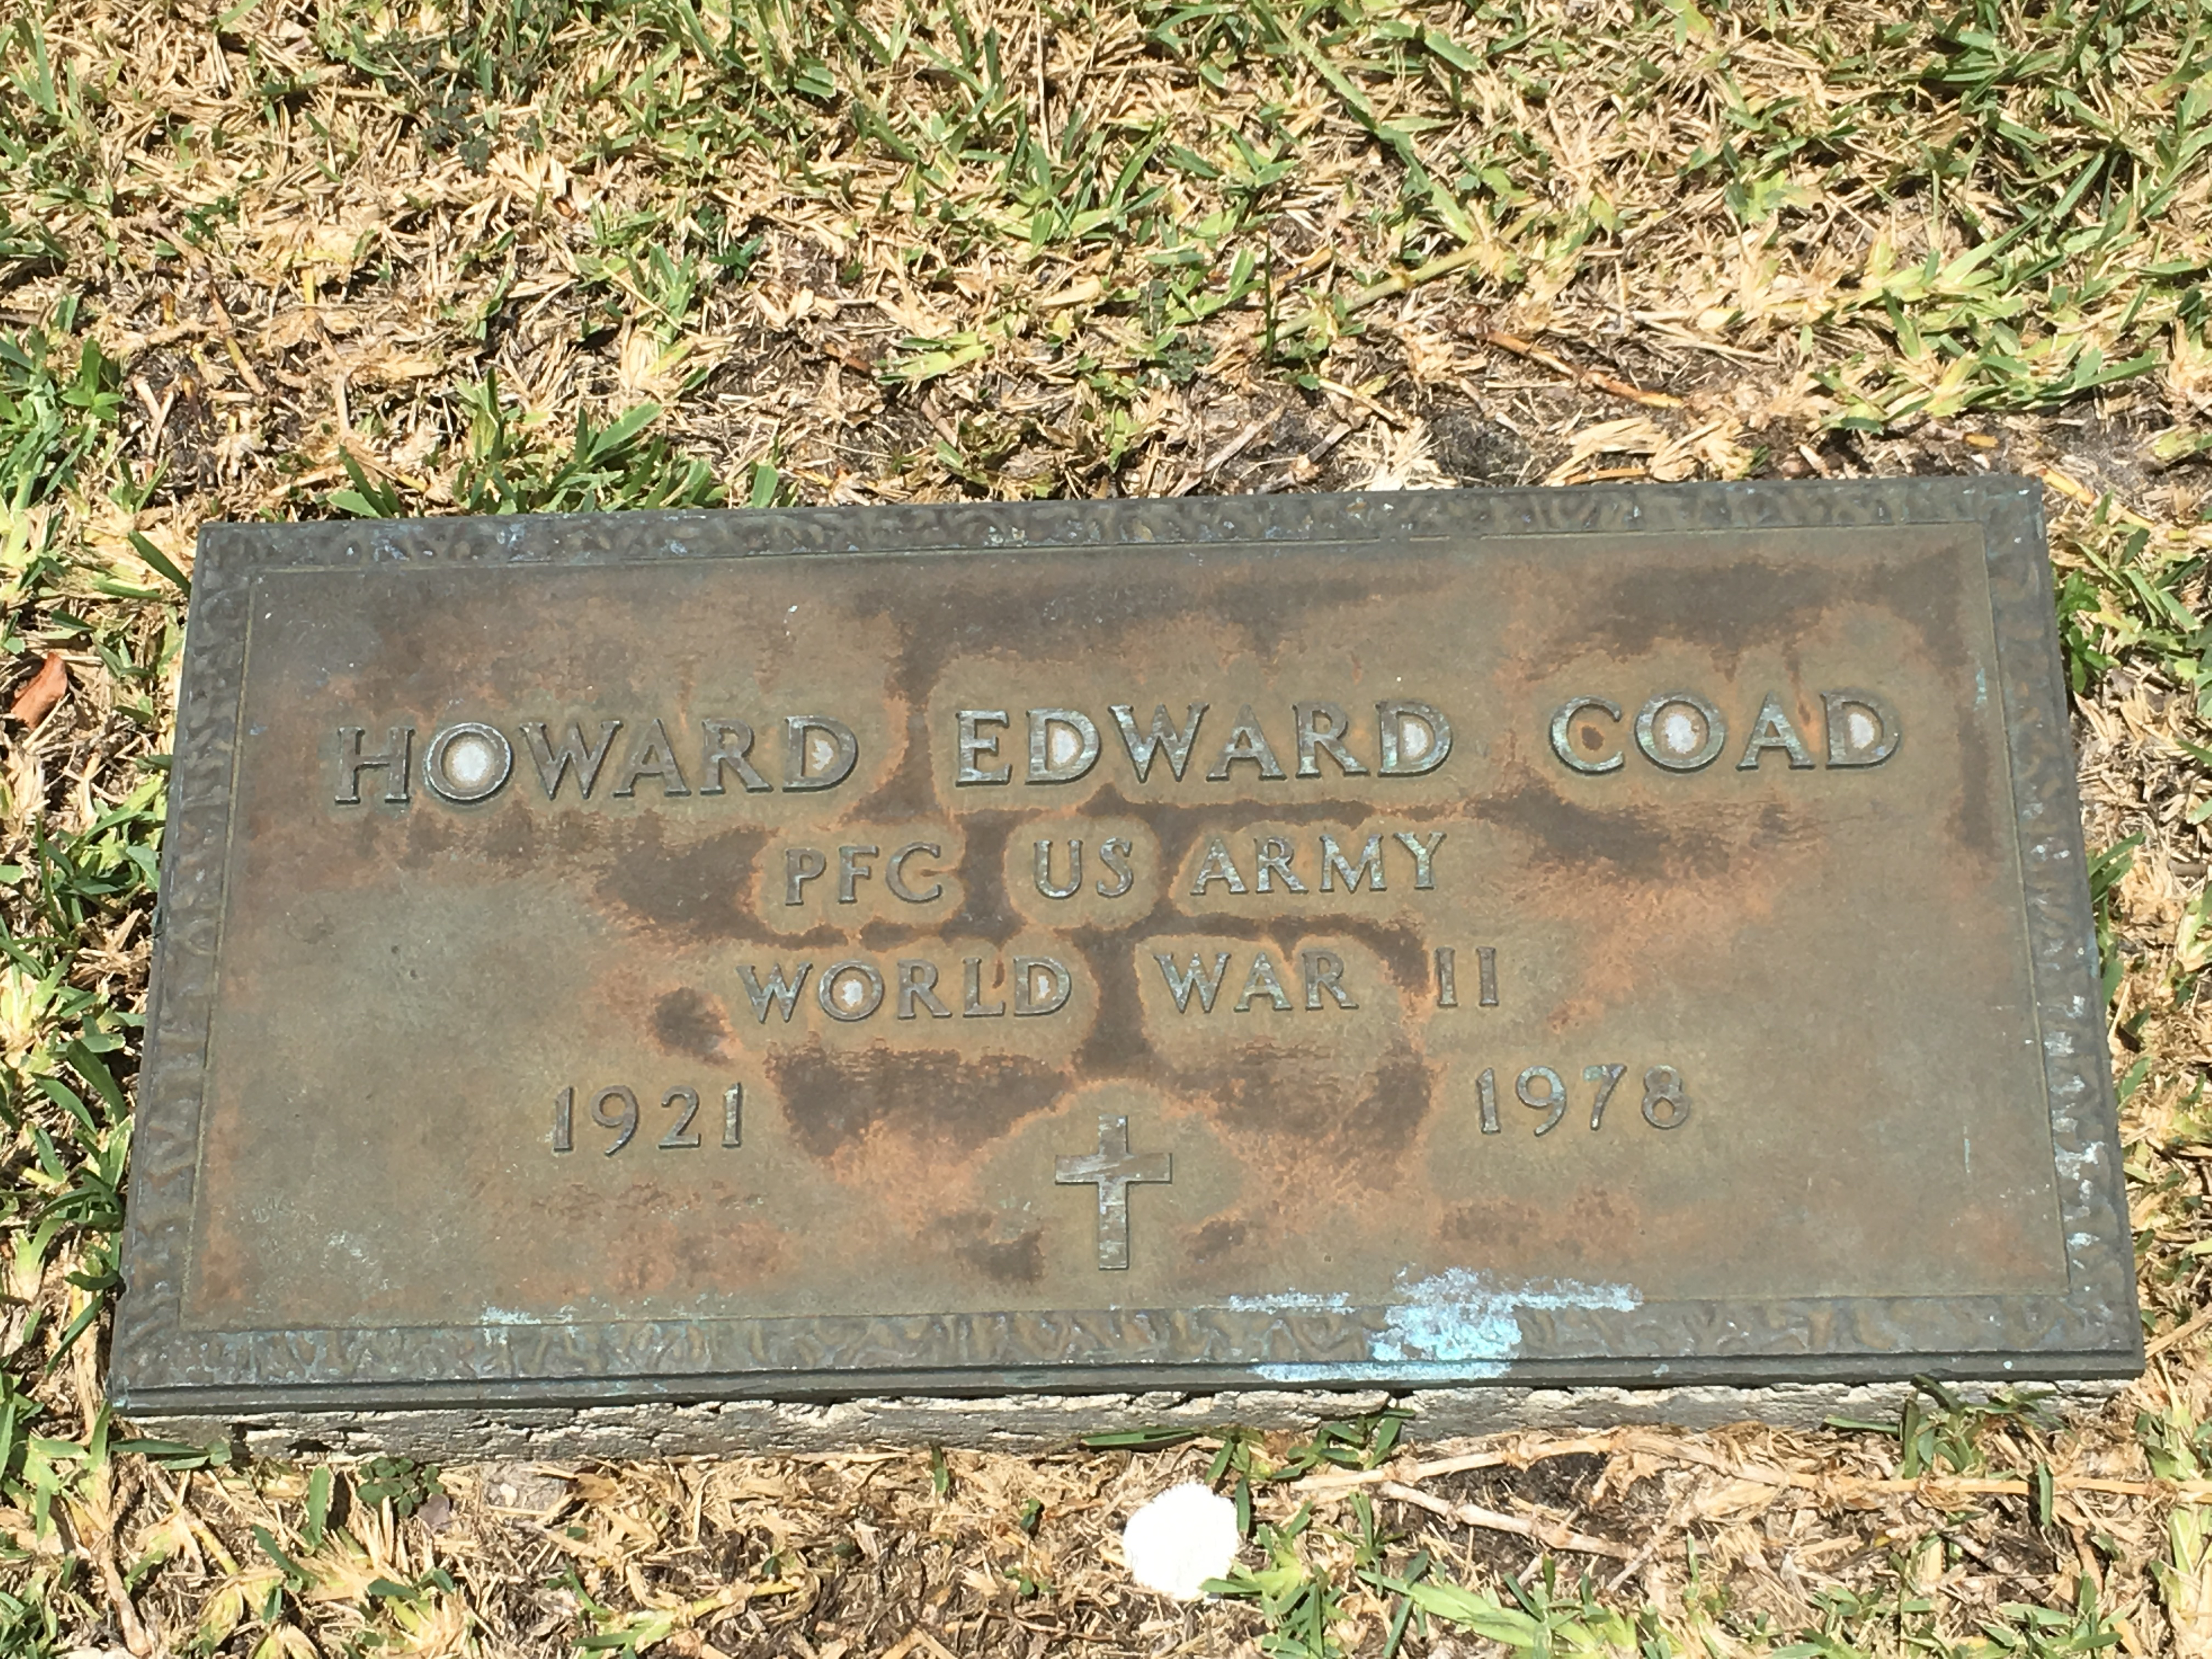 Howard Edward Coad